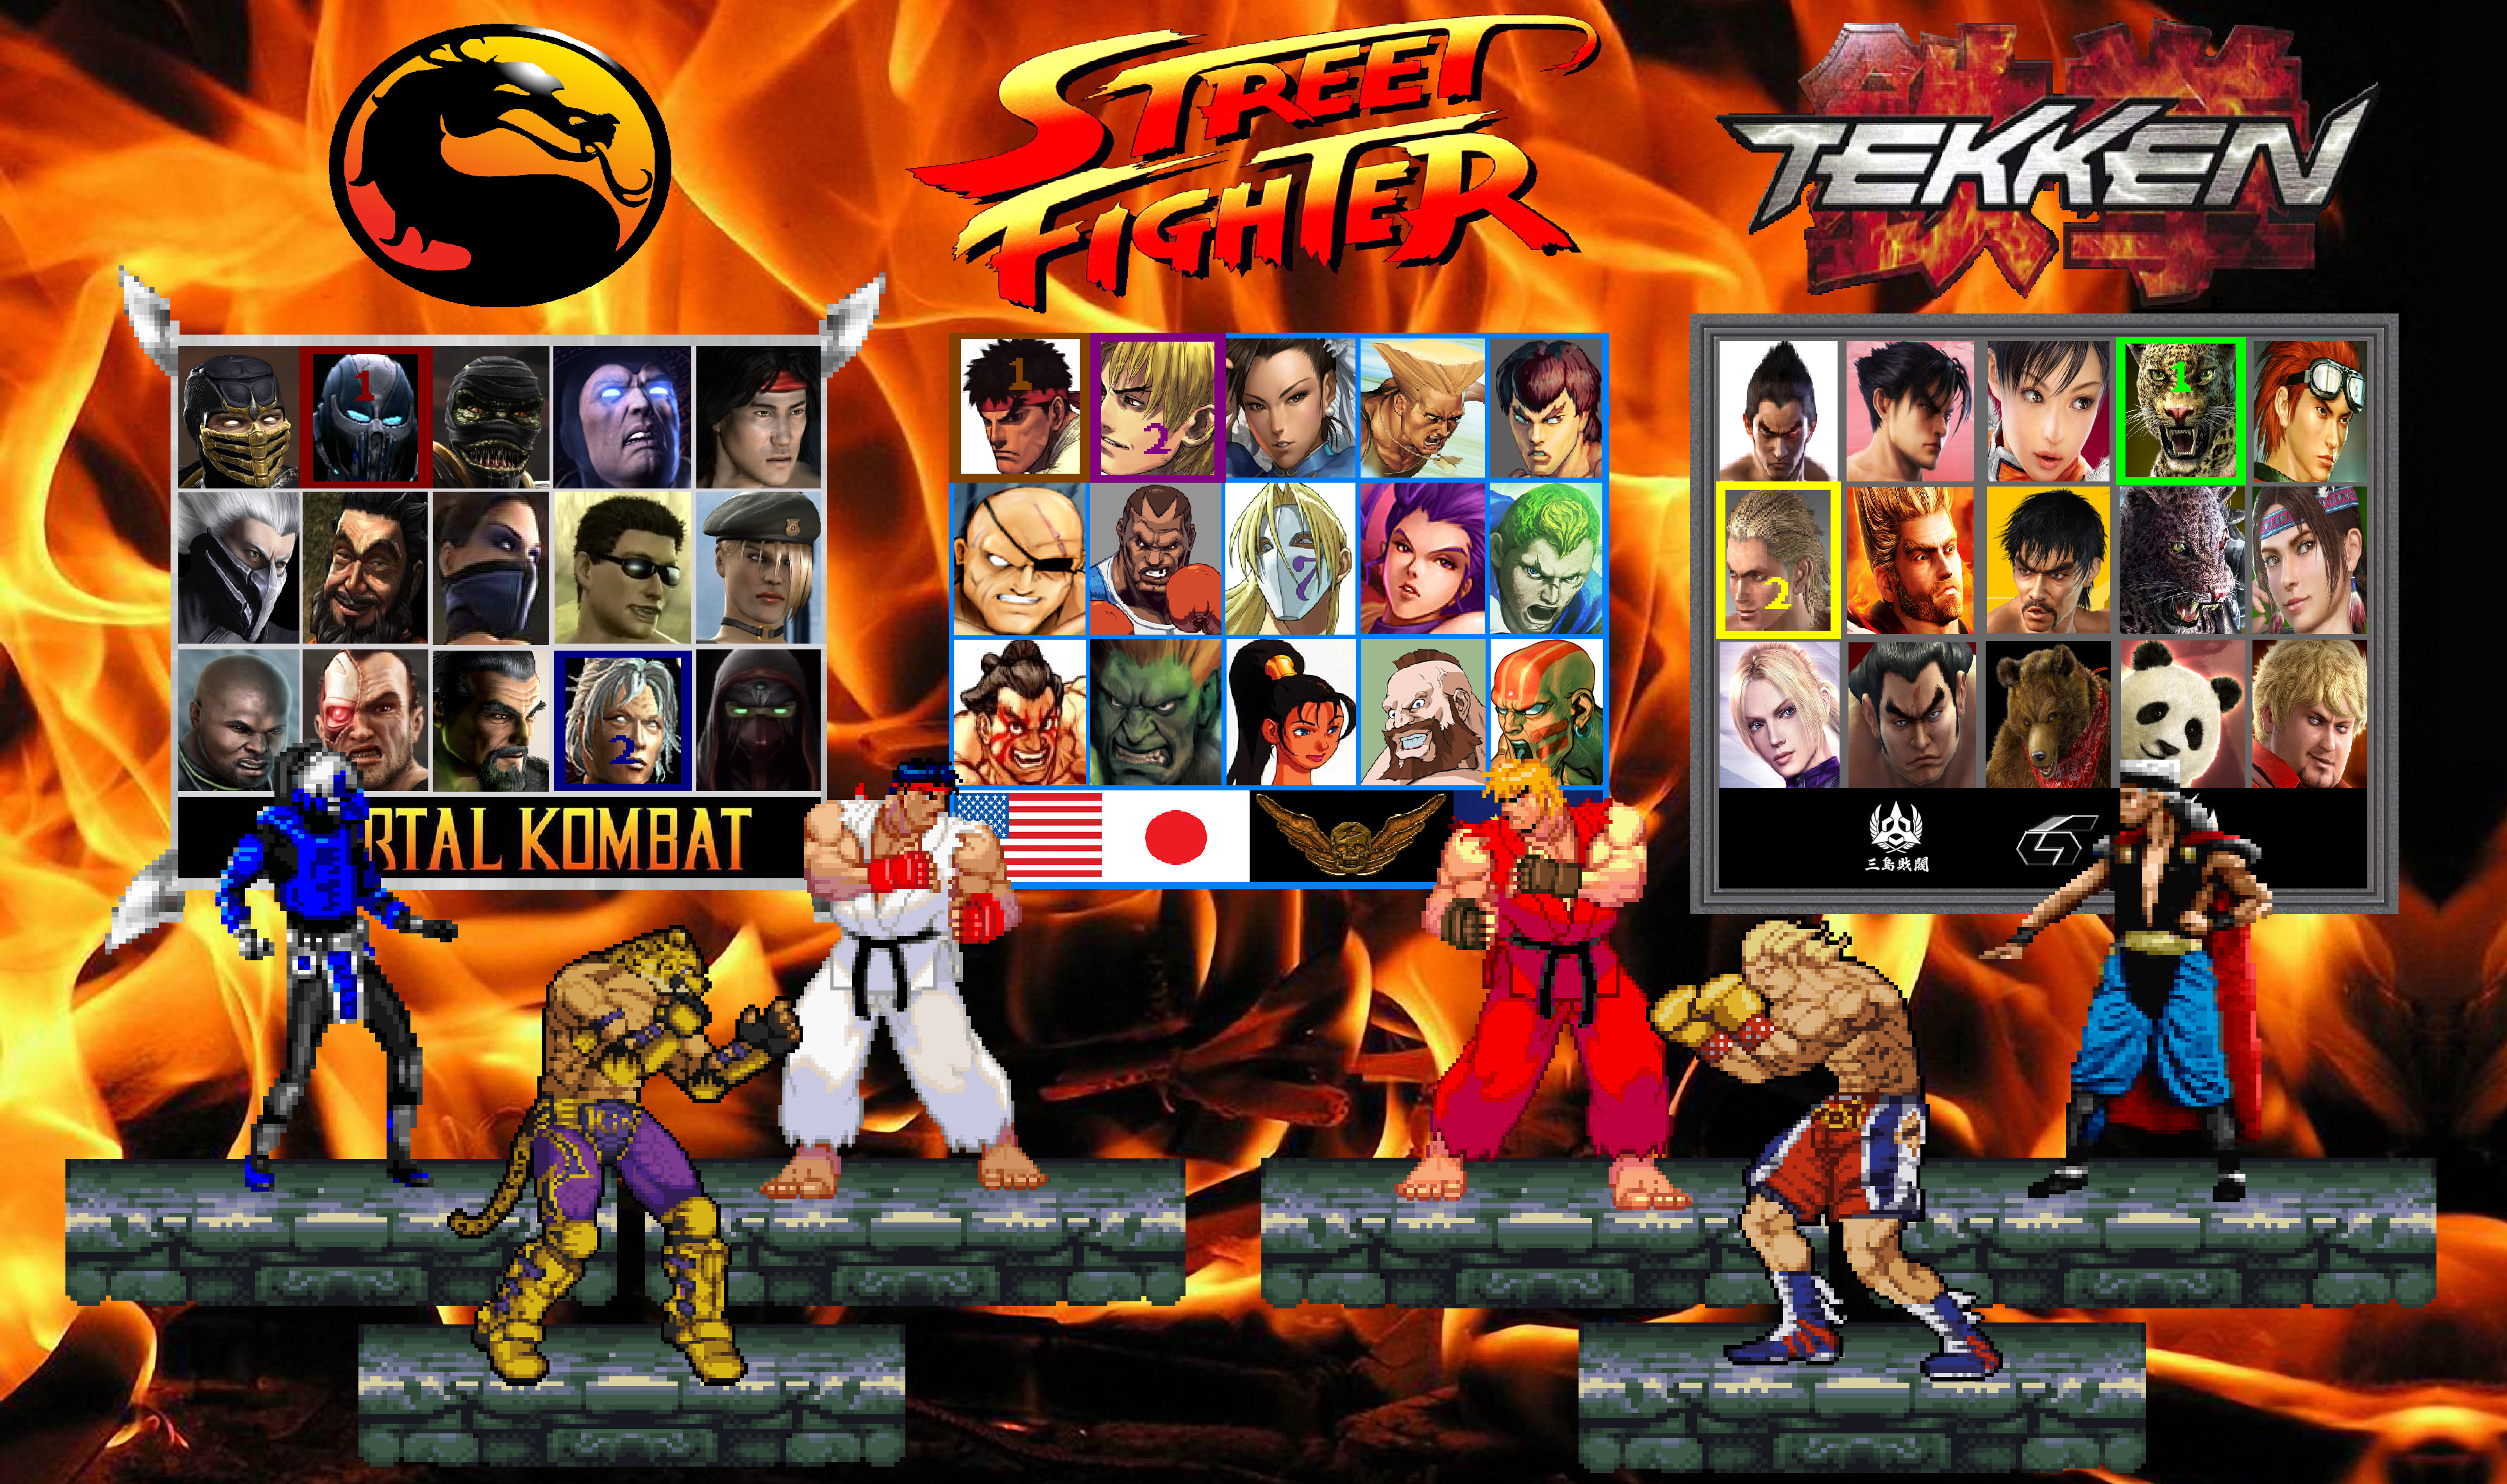 Tekken X Street Fighter - Character Select Screen by mieszko1012